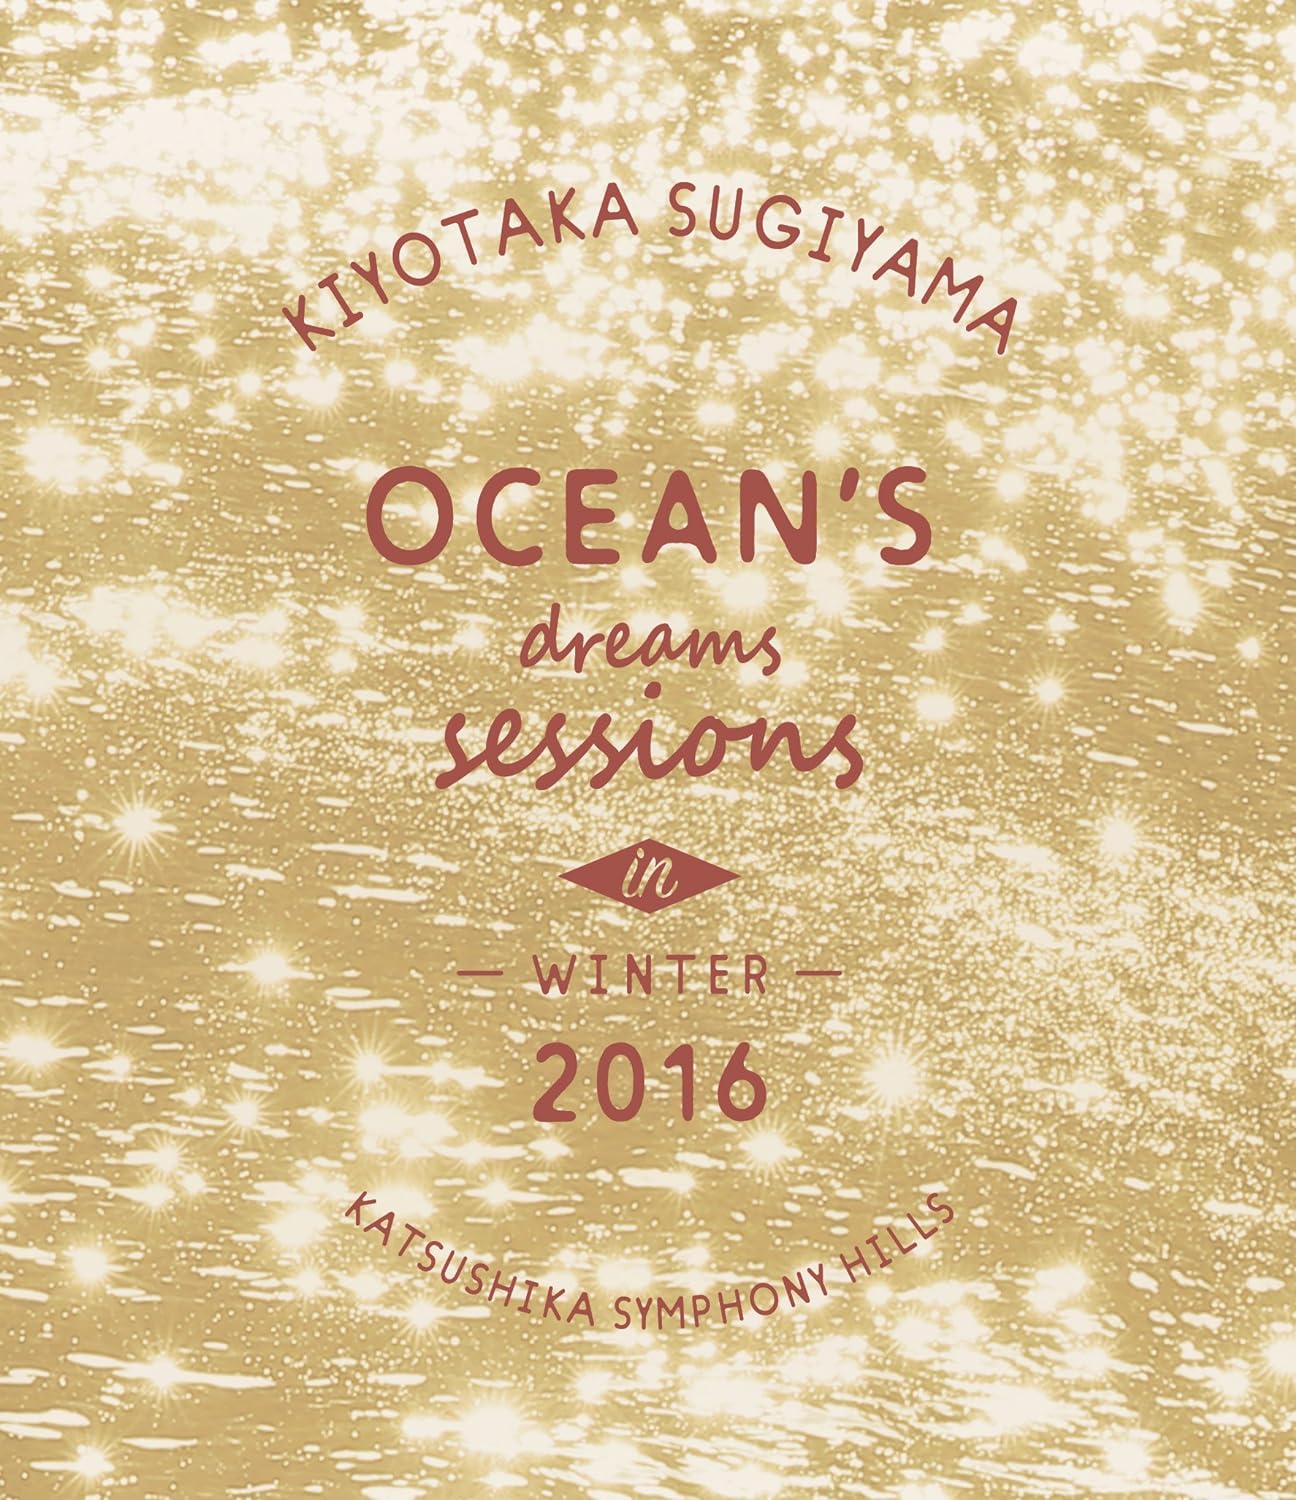 Ocean's dreams sessions~in winter 2016 yBlu-rayz